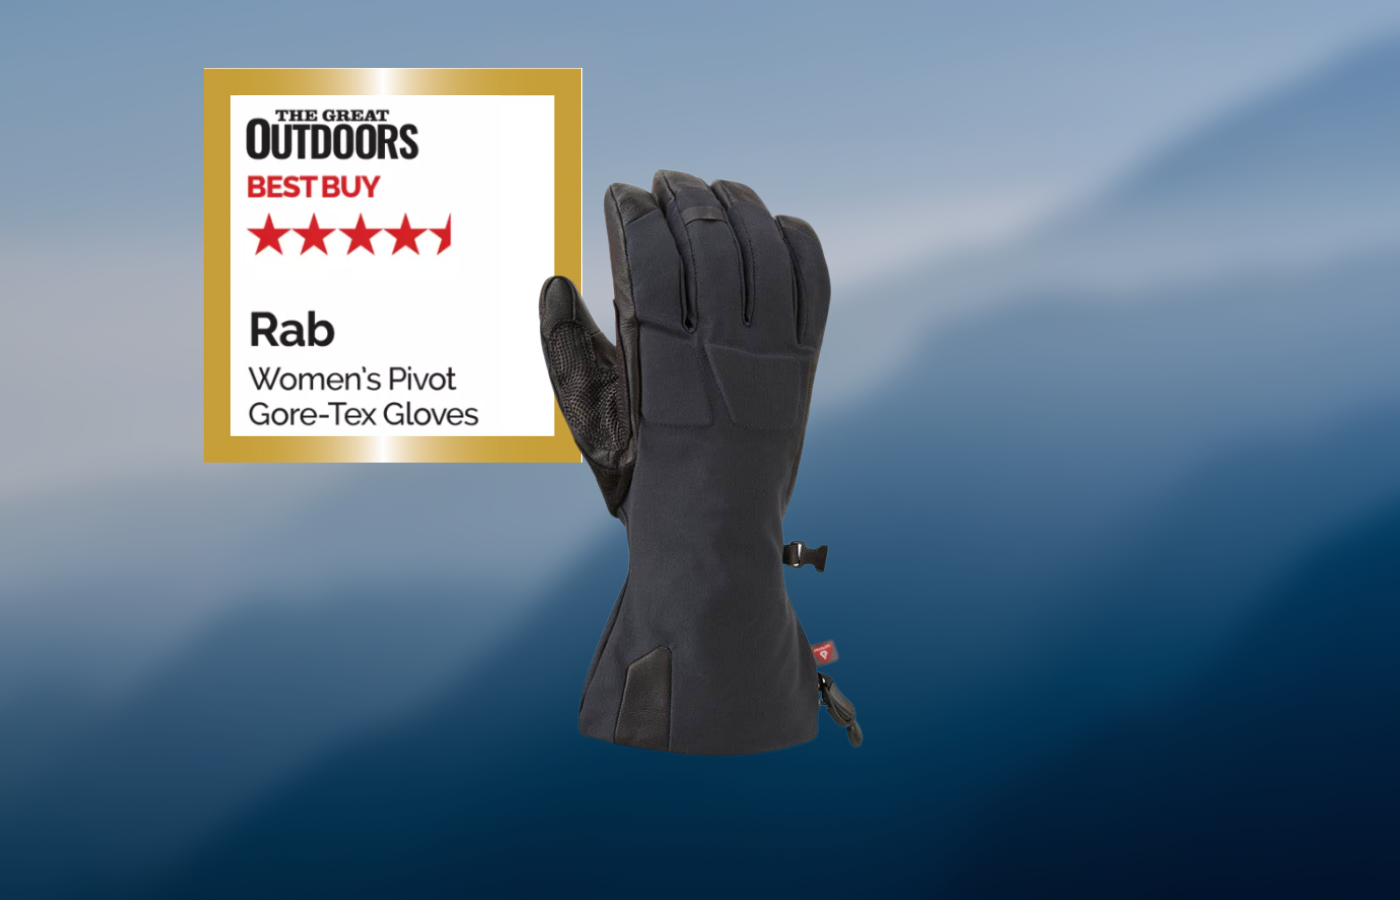 RAB Hiking glove rating 